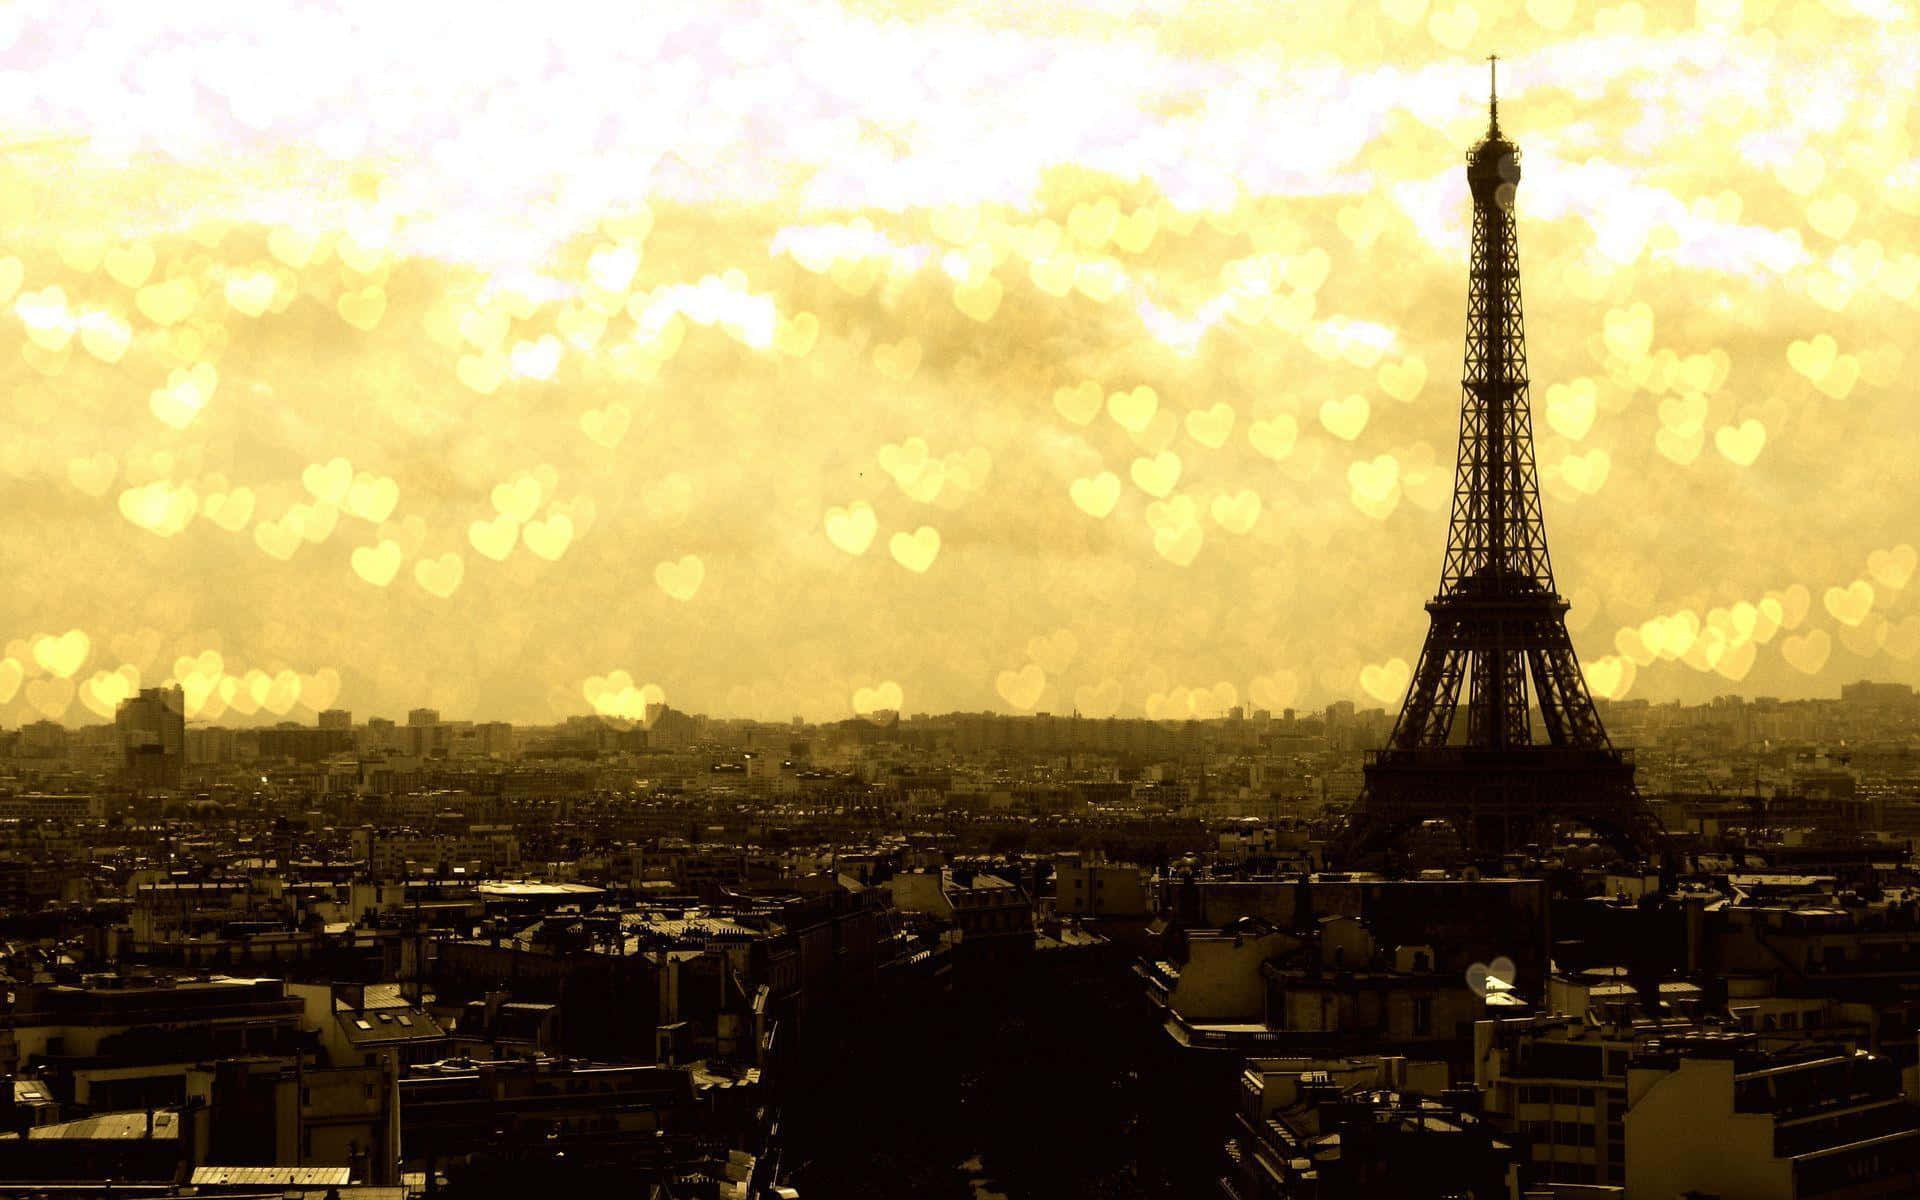 Illuminating the night in Paris, the iconic Eiffel Tower